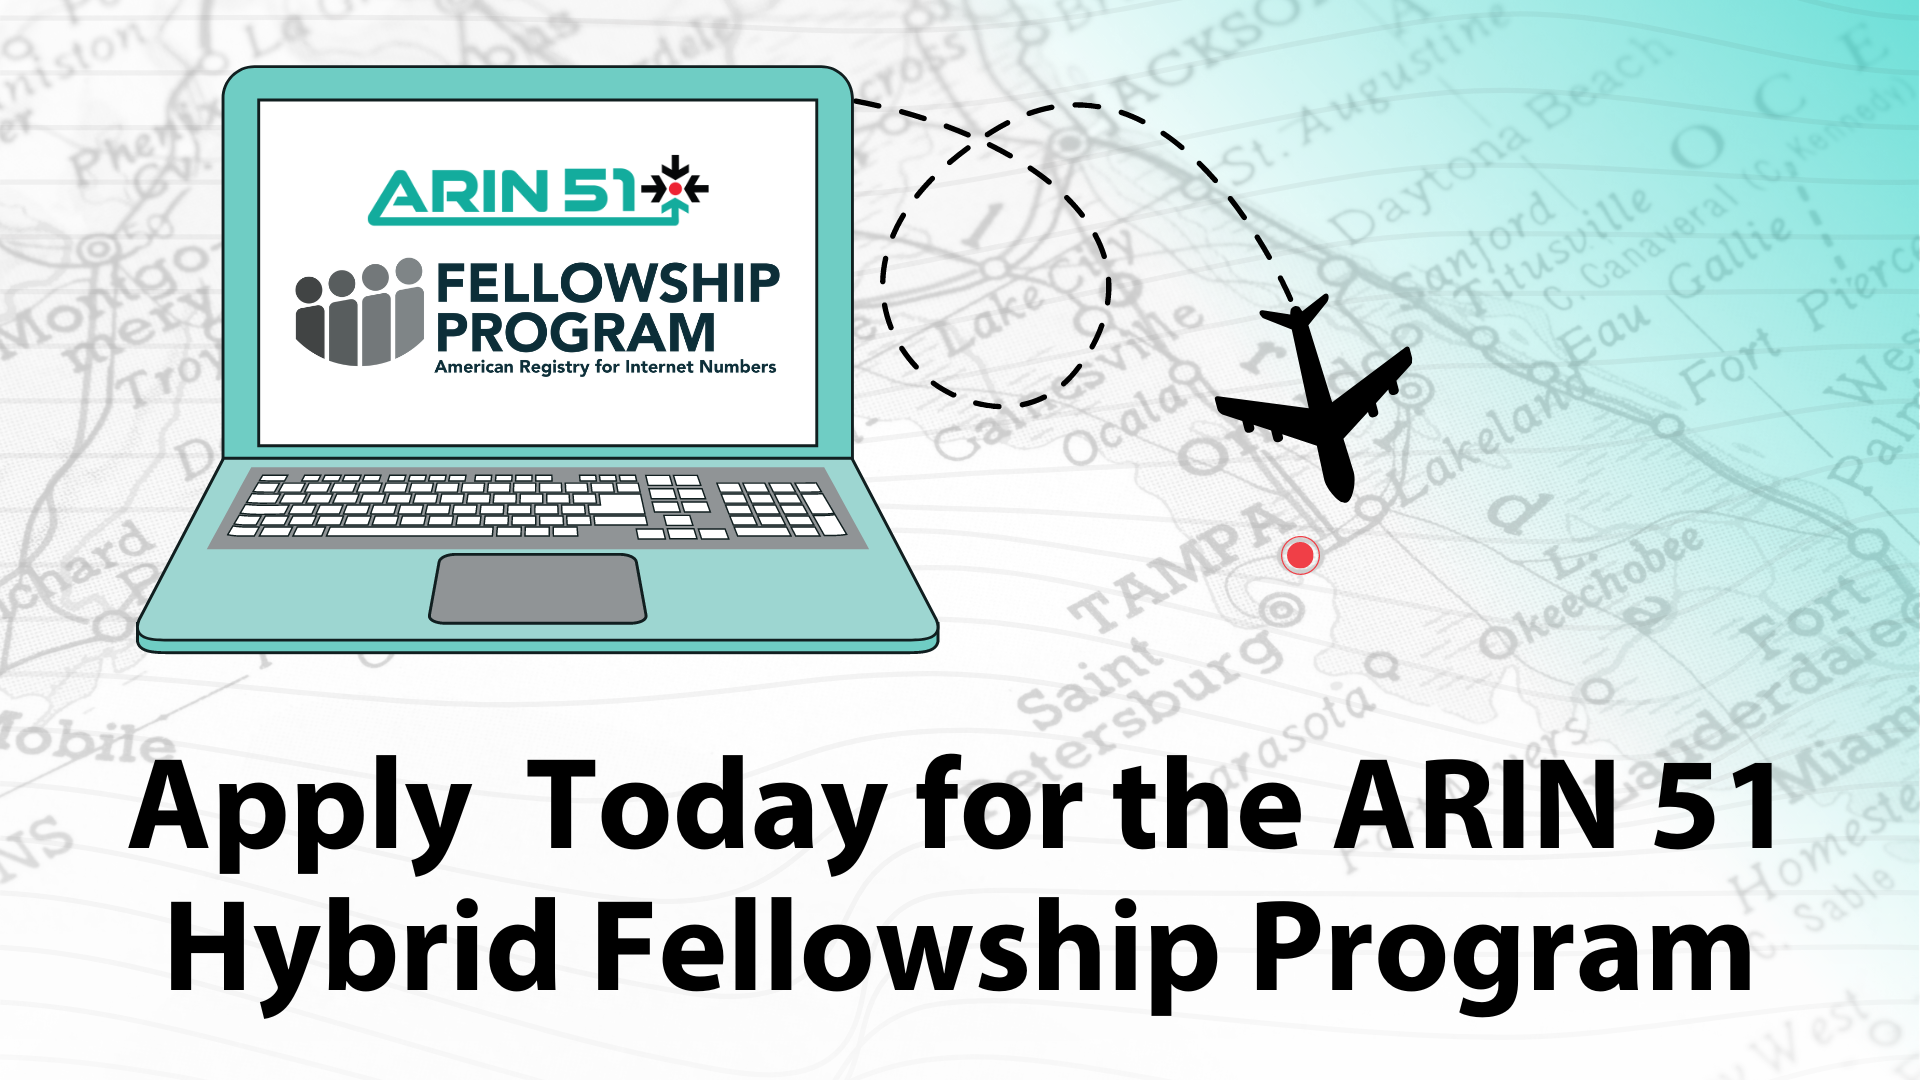 Apply Today for the ARIN 51 Fellowship Program